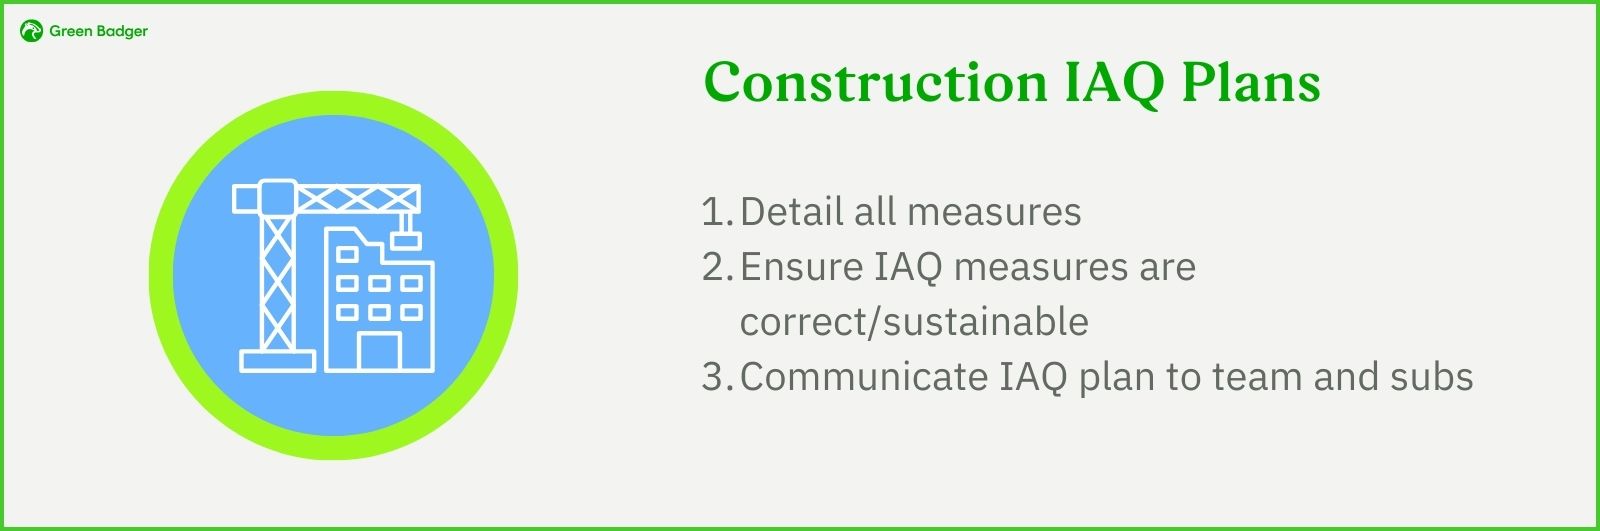 Construction IAQ